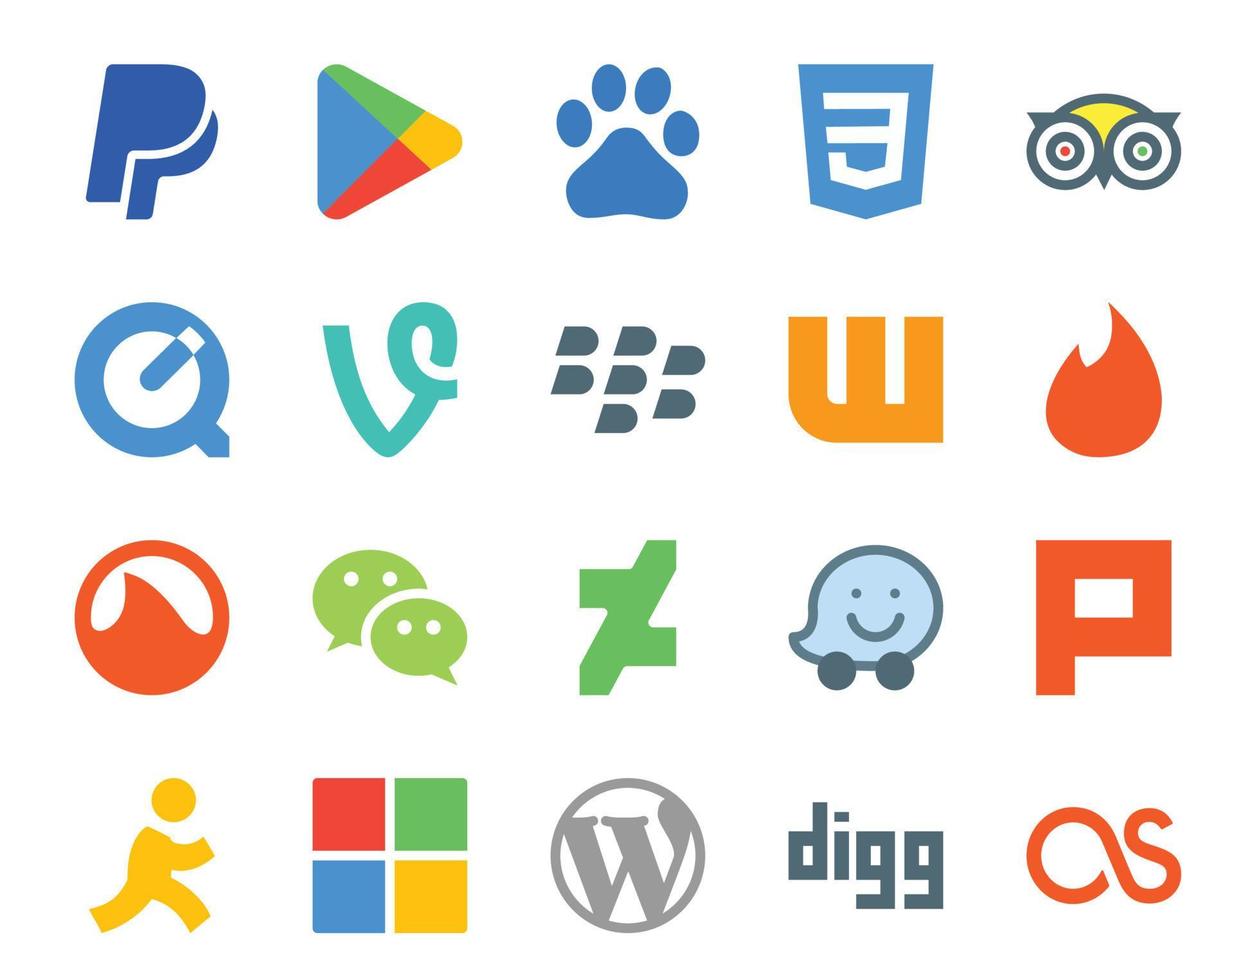 Paquete de 20 íconos de redes sociales que incluye plurk deviantart vine messenger grooveshark vector